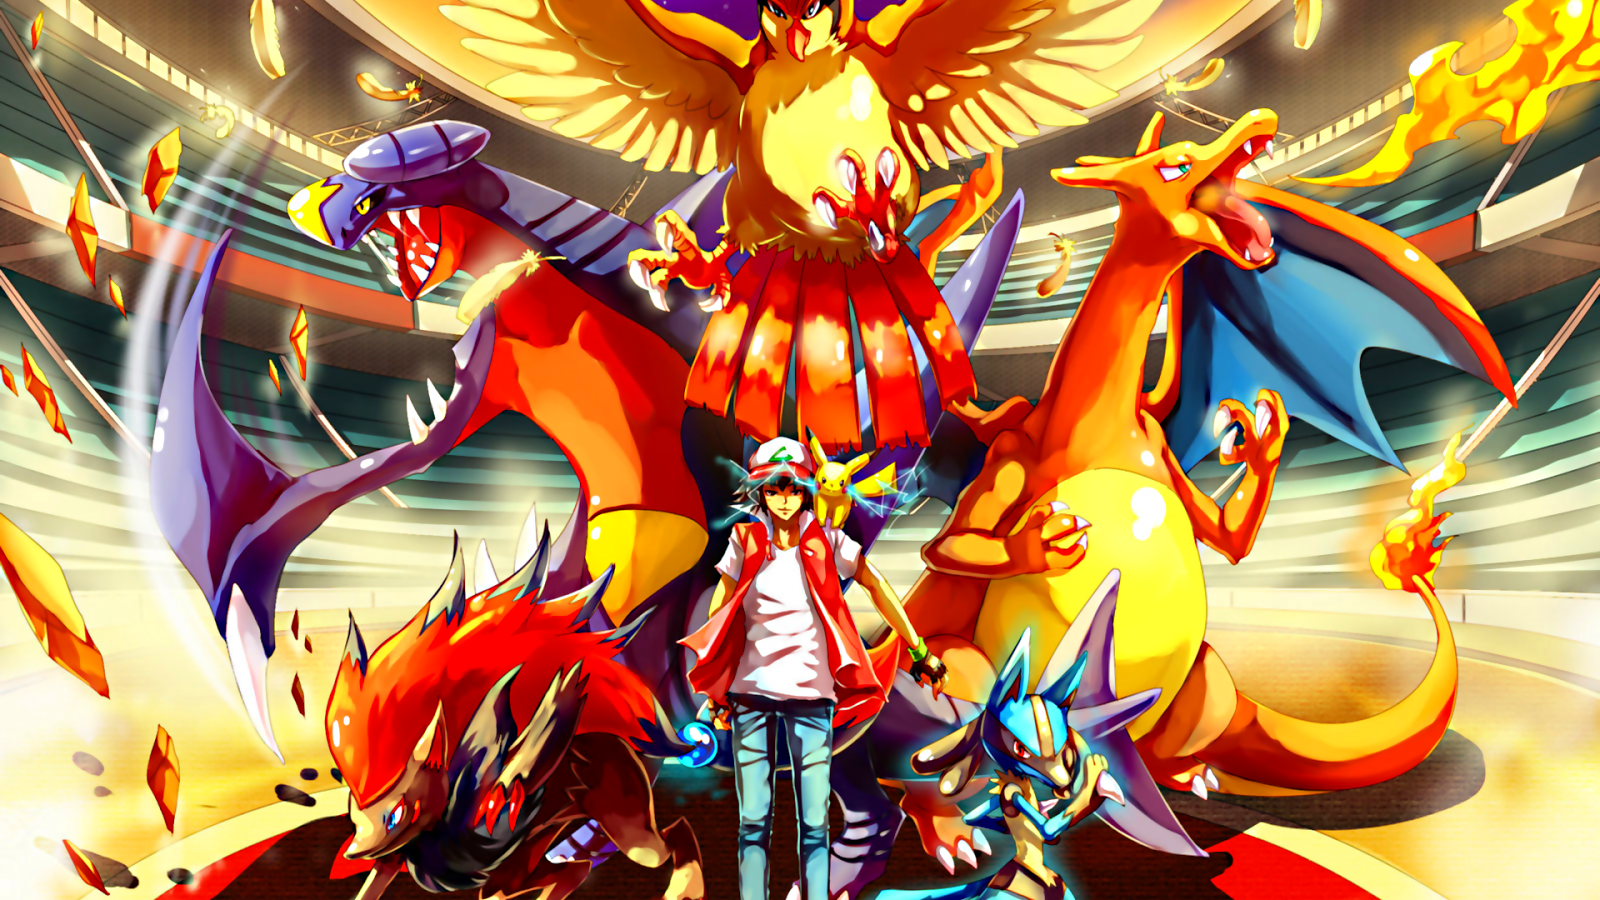 Cool Fire Pokemon Wallpaper Background 183 Wallpaper